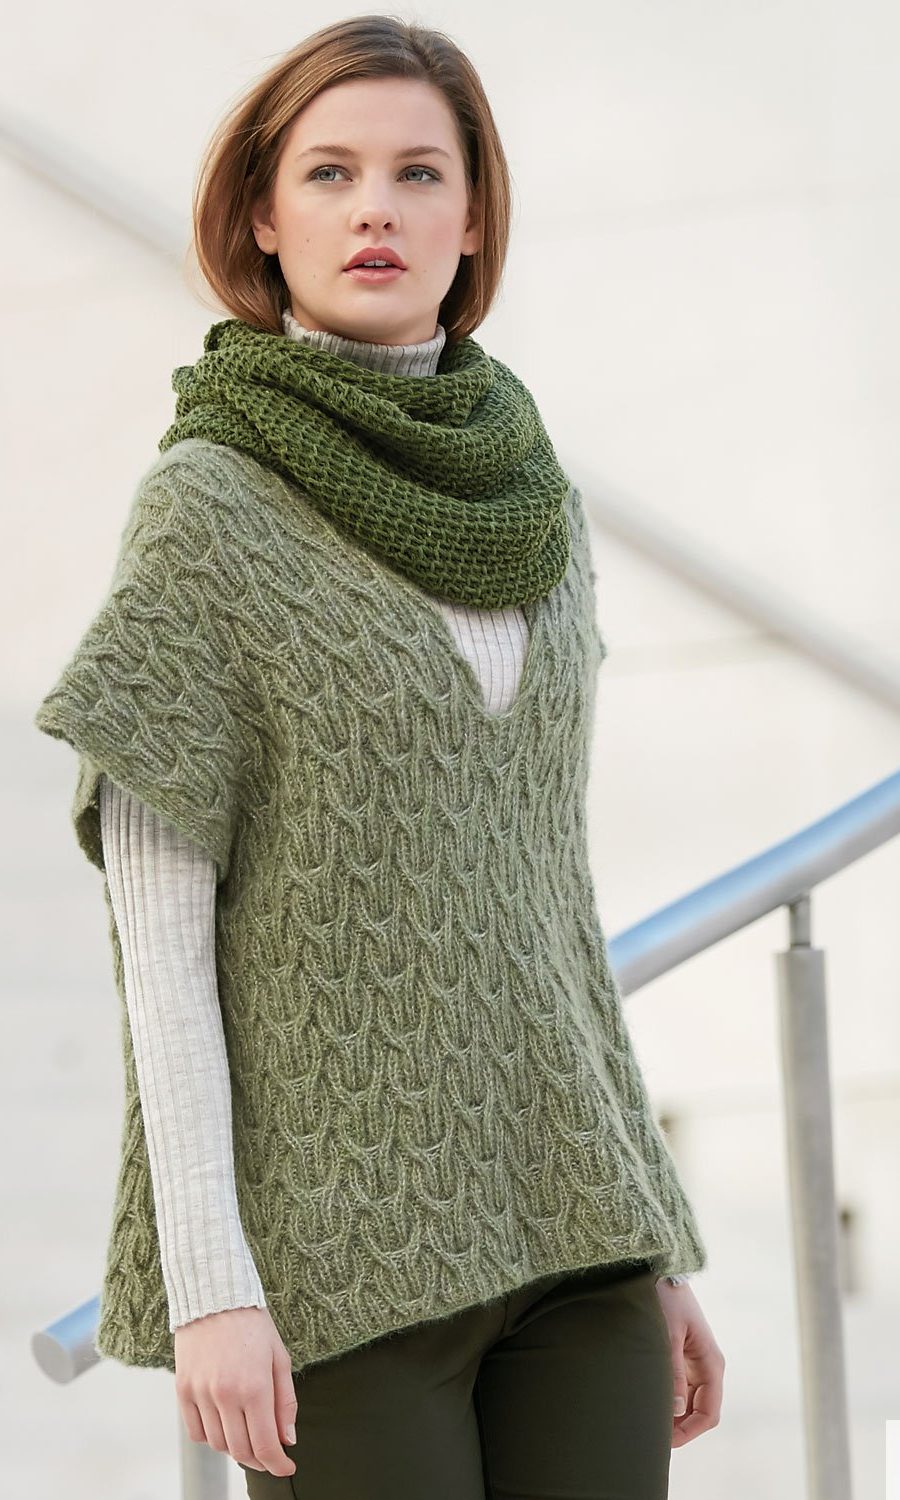 pattern-knit-crochet-woman-poncho-autumn-winter-katia-6040-47-g